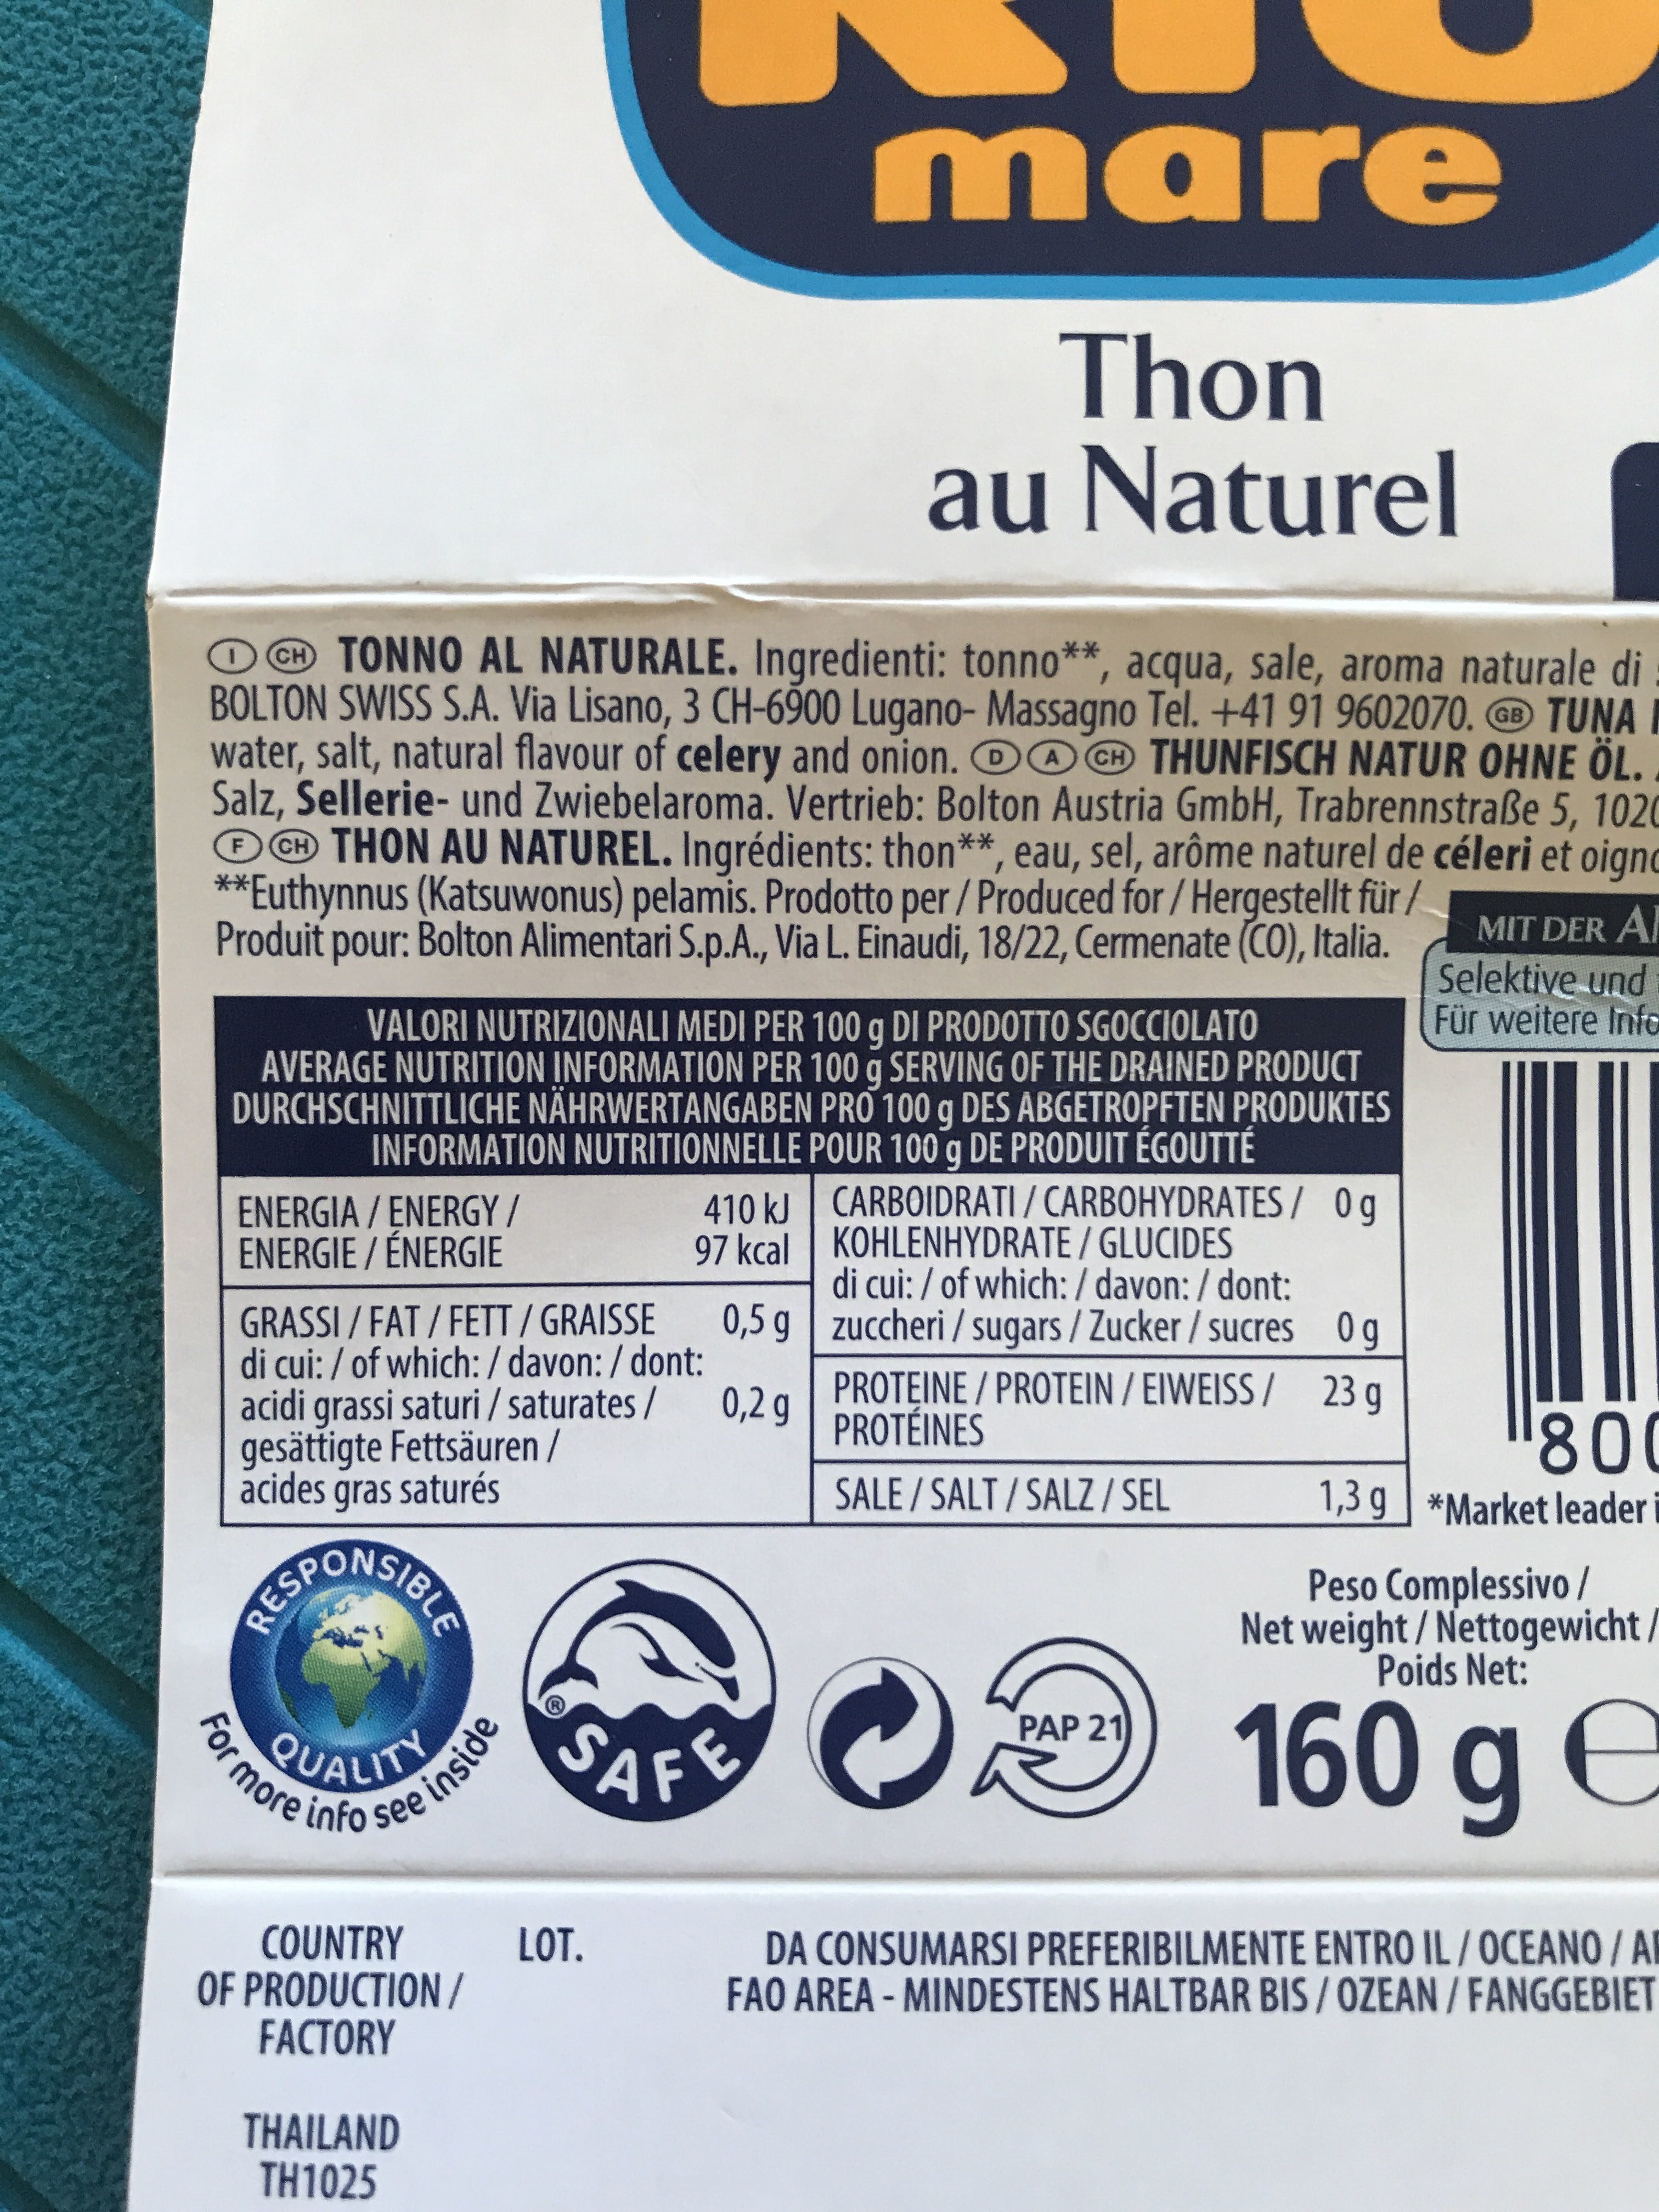 Thunfisch natur ohne Öl - Product - en